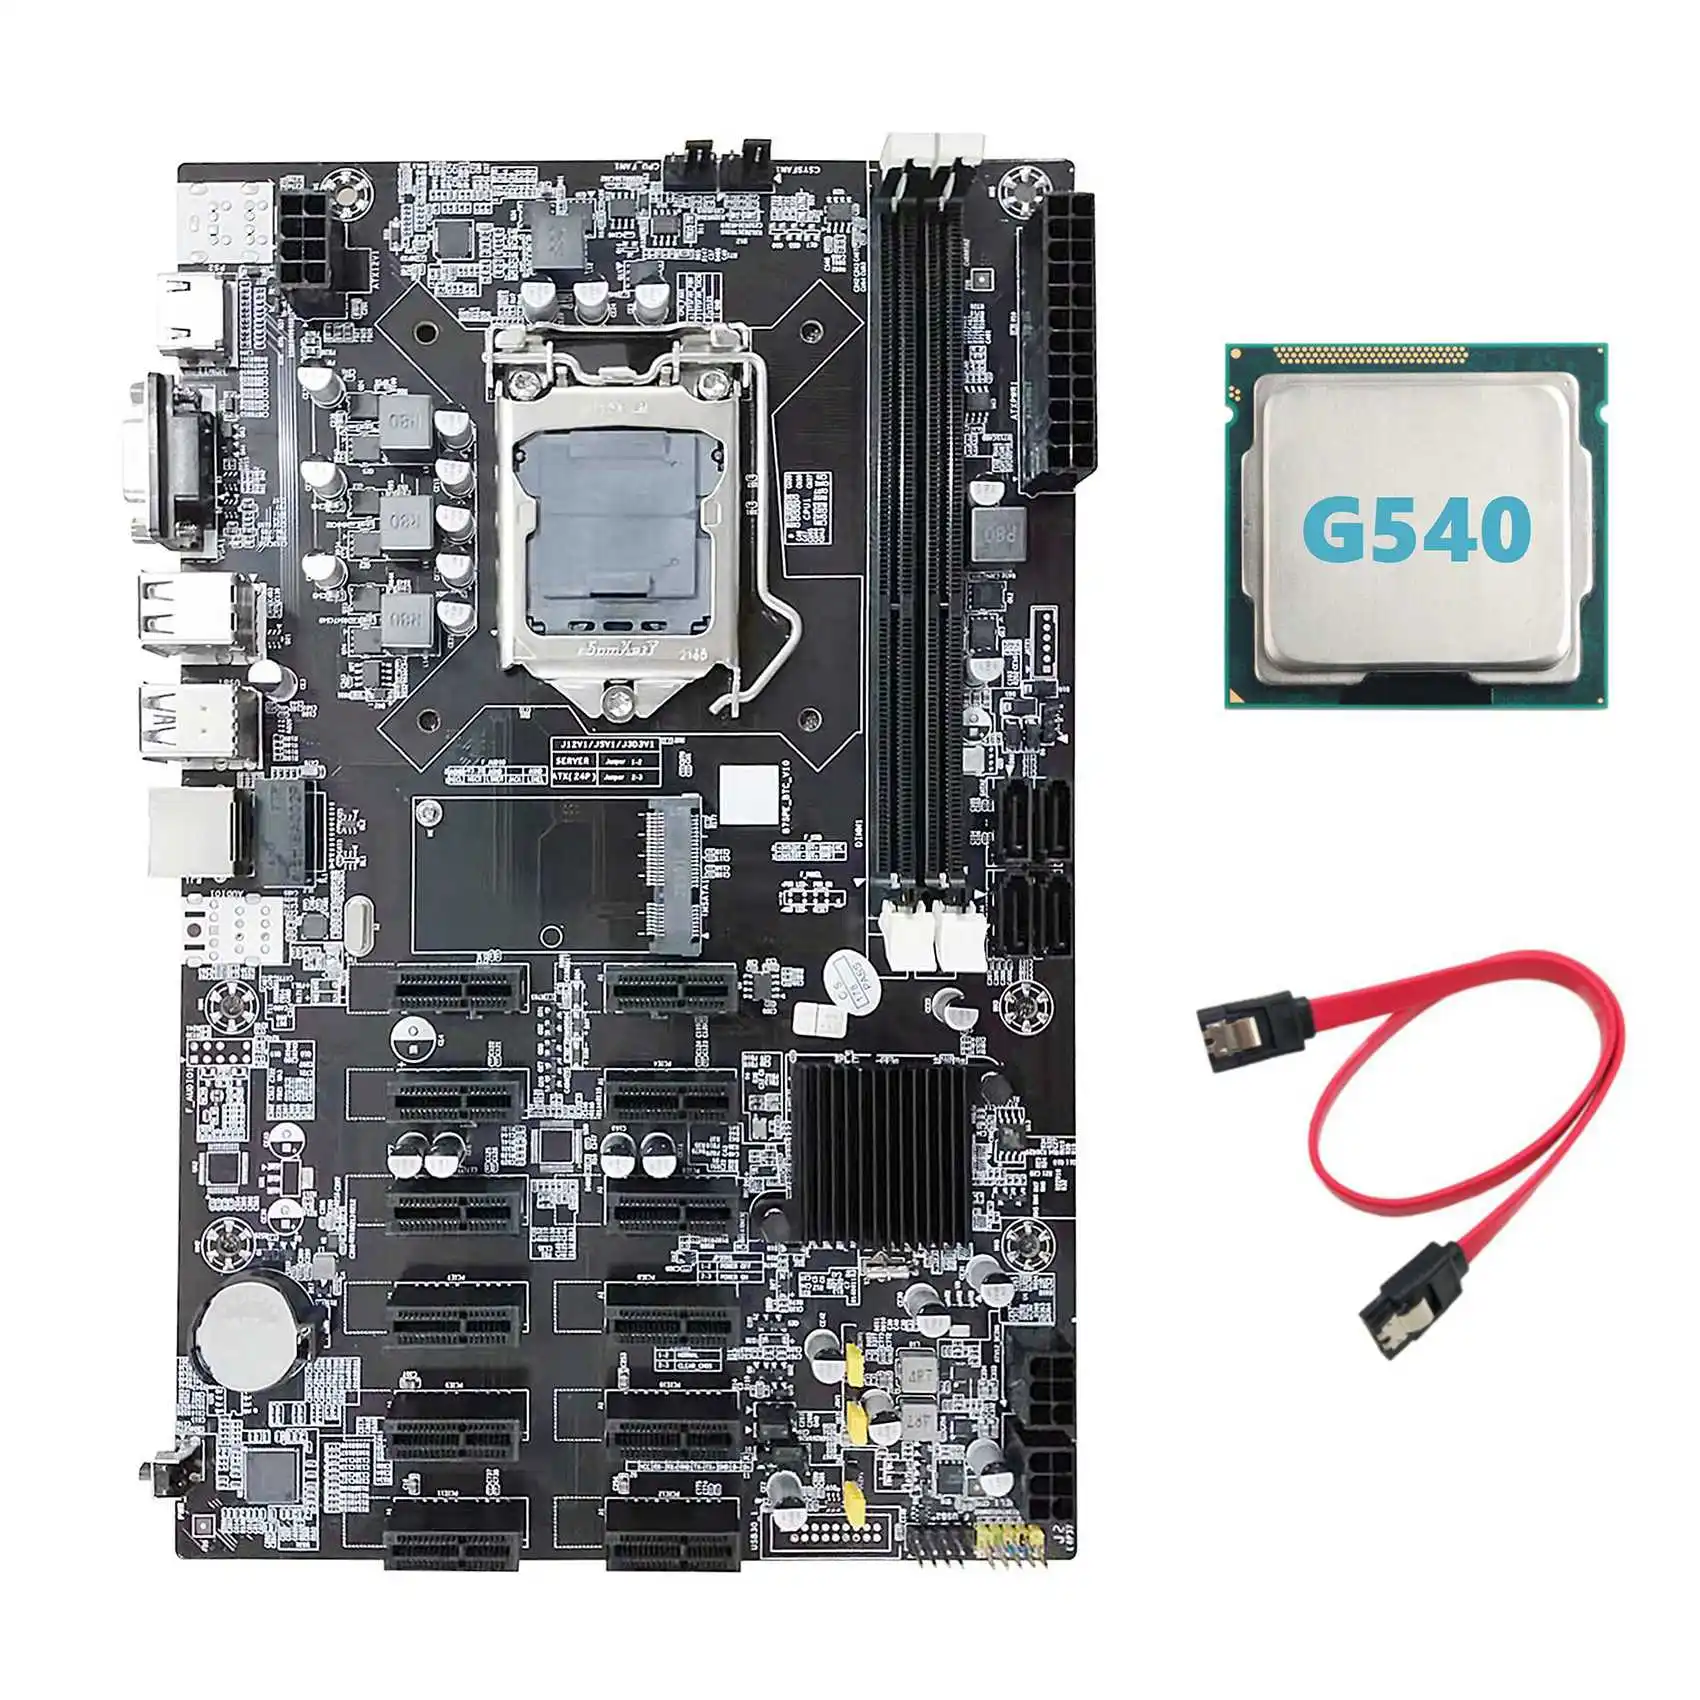 B75 12 PCIE ETH Mining Motherboard+G540 CPU+SATA Cable LGA1155 MSATA USB3.0 SATA3.0 DDR3 B75 BTC Miner Motherboard